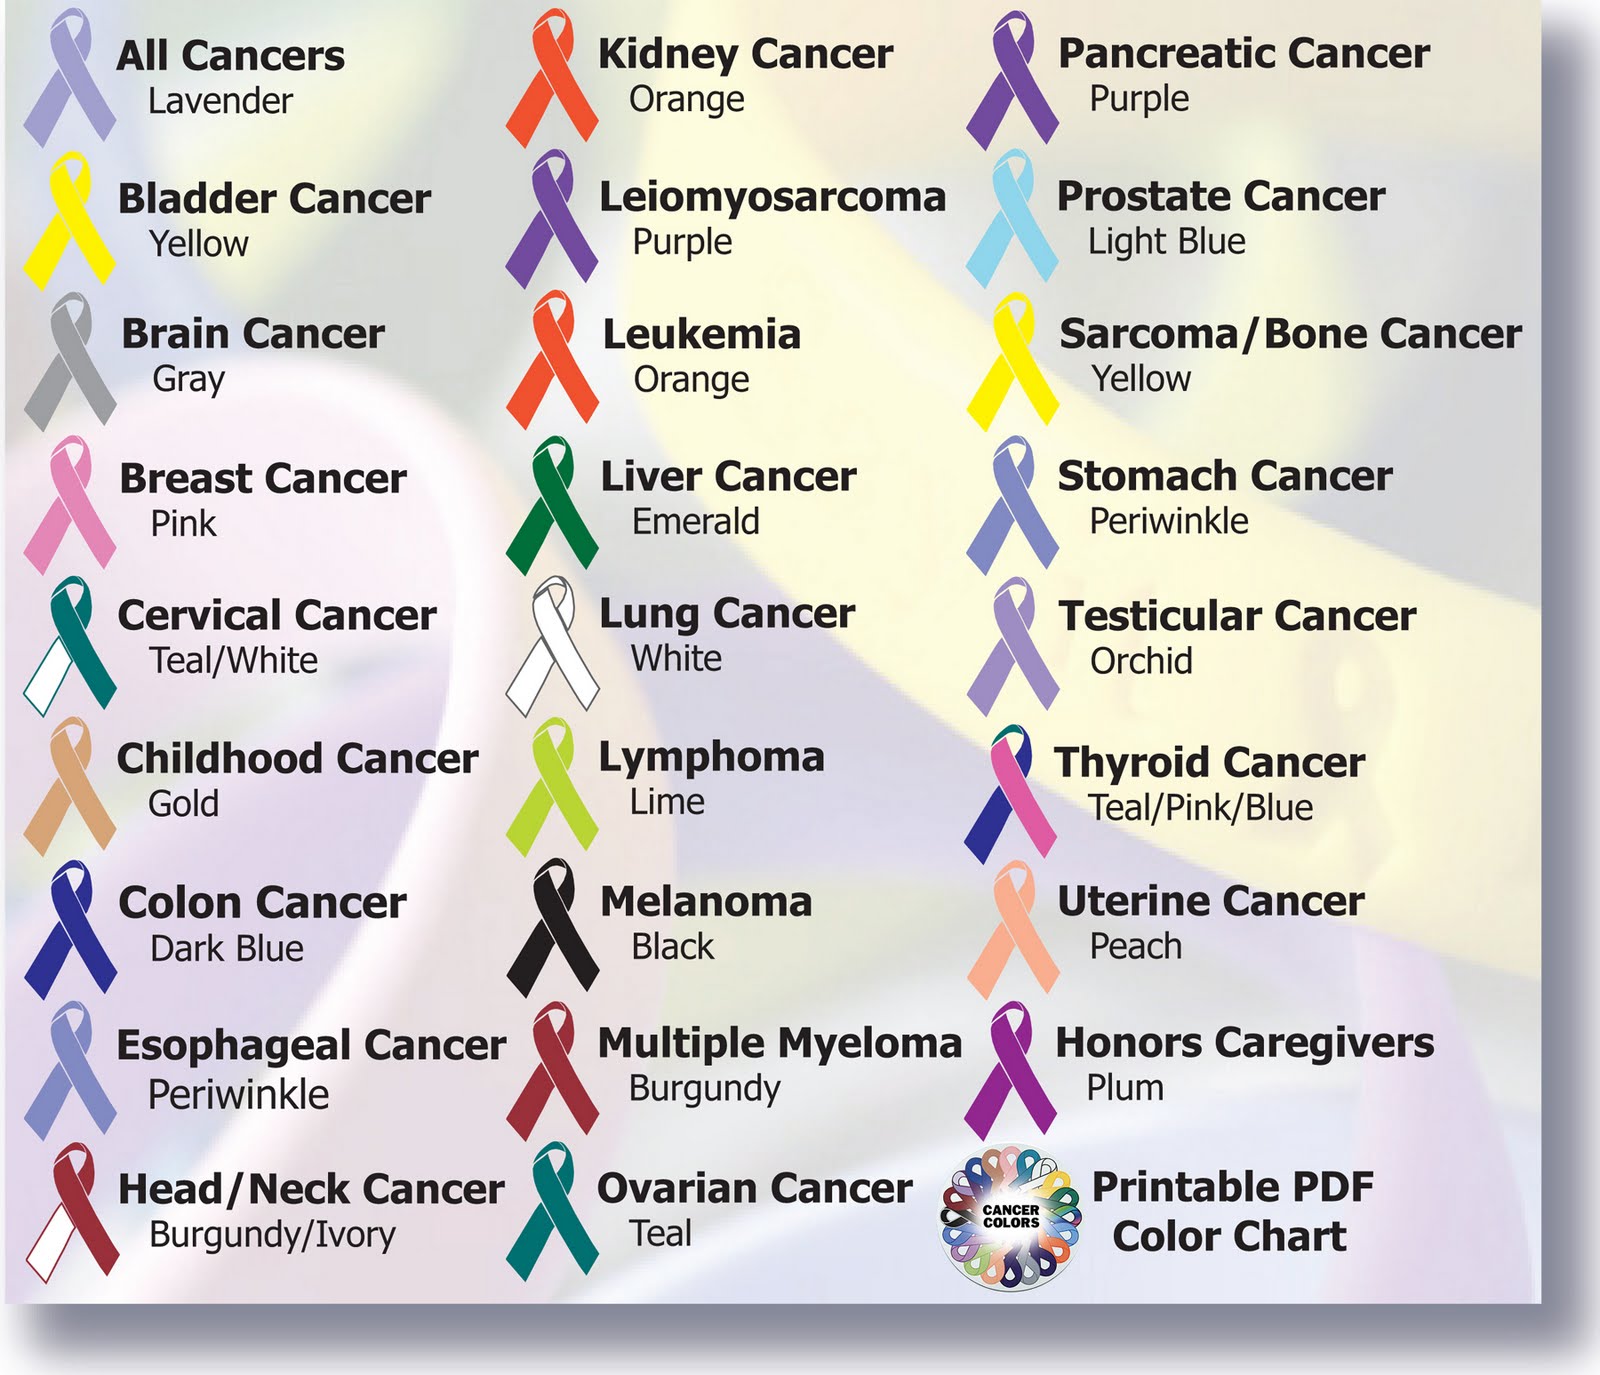 http://3.bp.blogspot.com/-Ftx013jA9Ns/T1ogu03RzSI/AAAAAAAAA2I/2PV2F6jue1g/s1600/cancer_Ribbon_color_chart.jpg